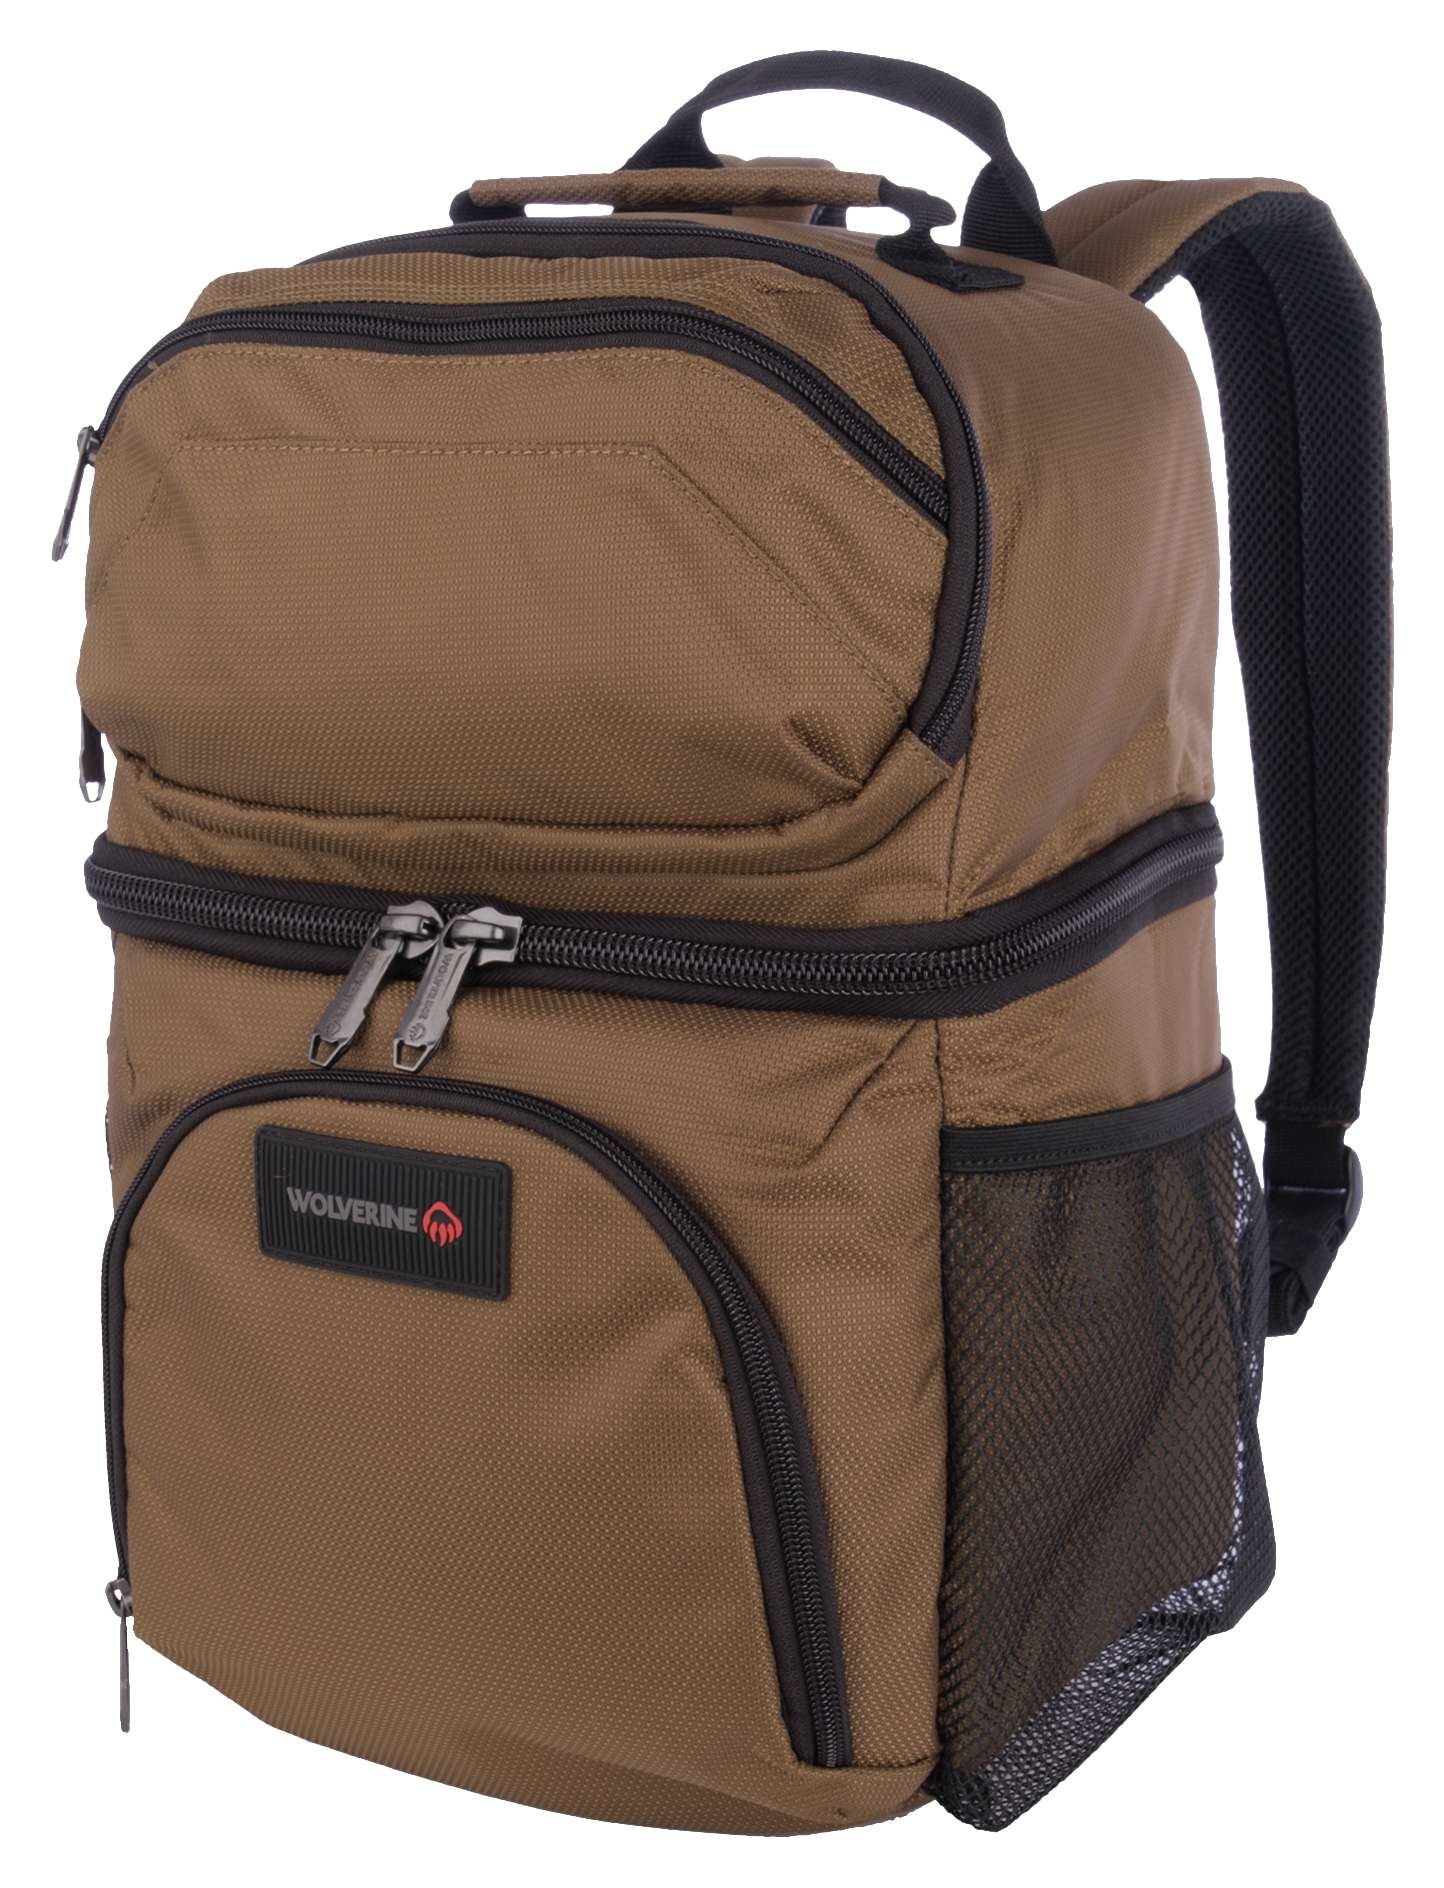 Wolverine 18-Can Cooler Backpack